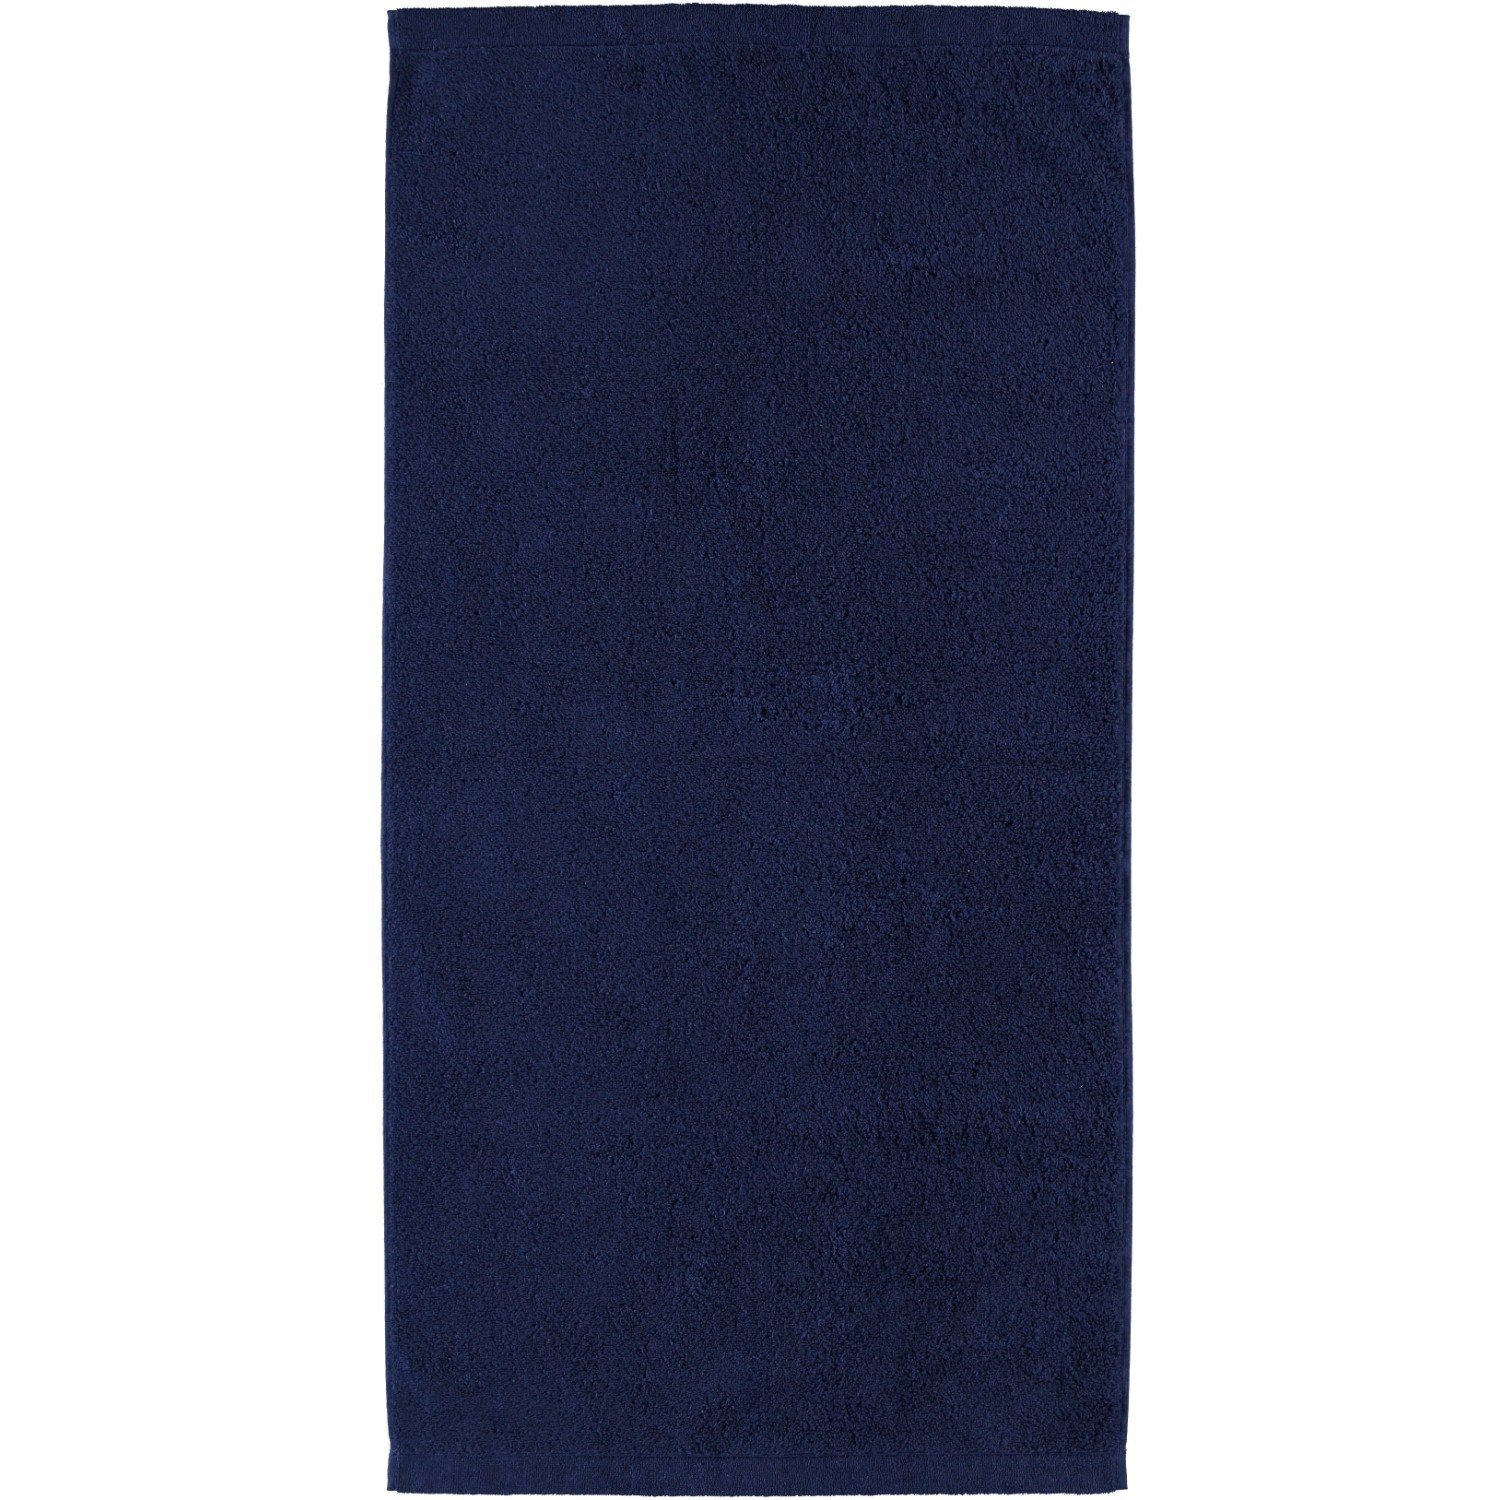 Cawö, Handtuch Life Style, Uni, Art. 7007 70 x 140 cm marineblau